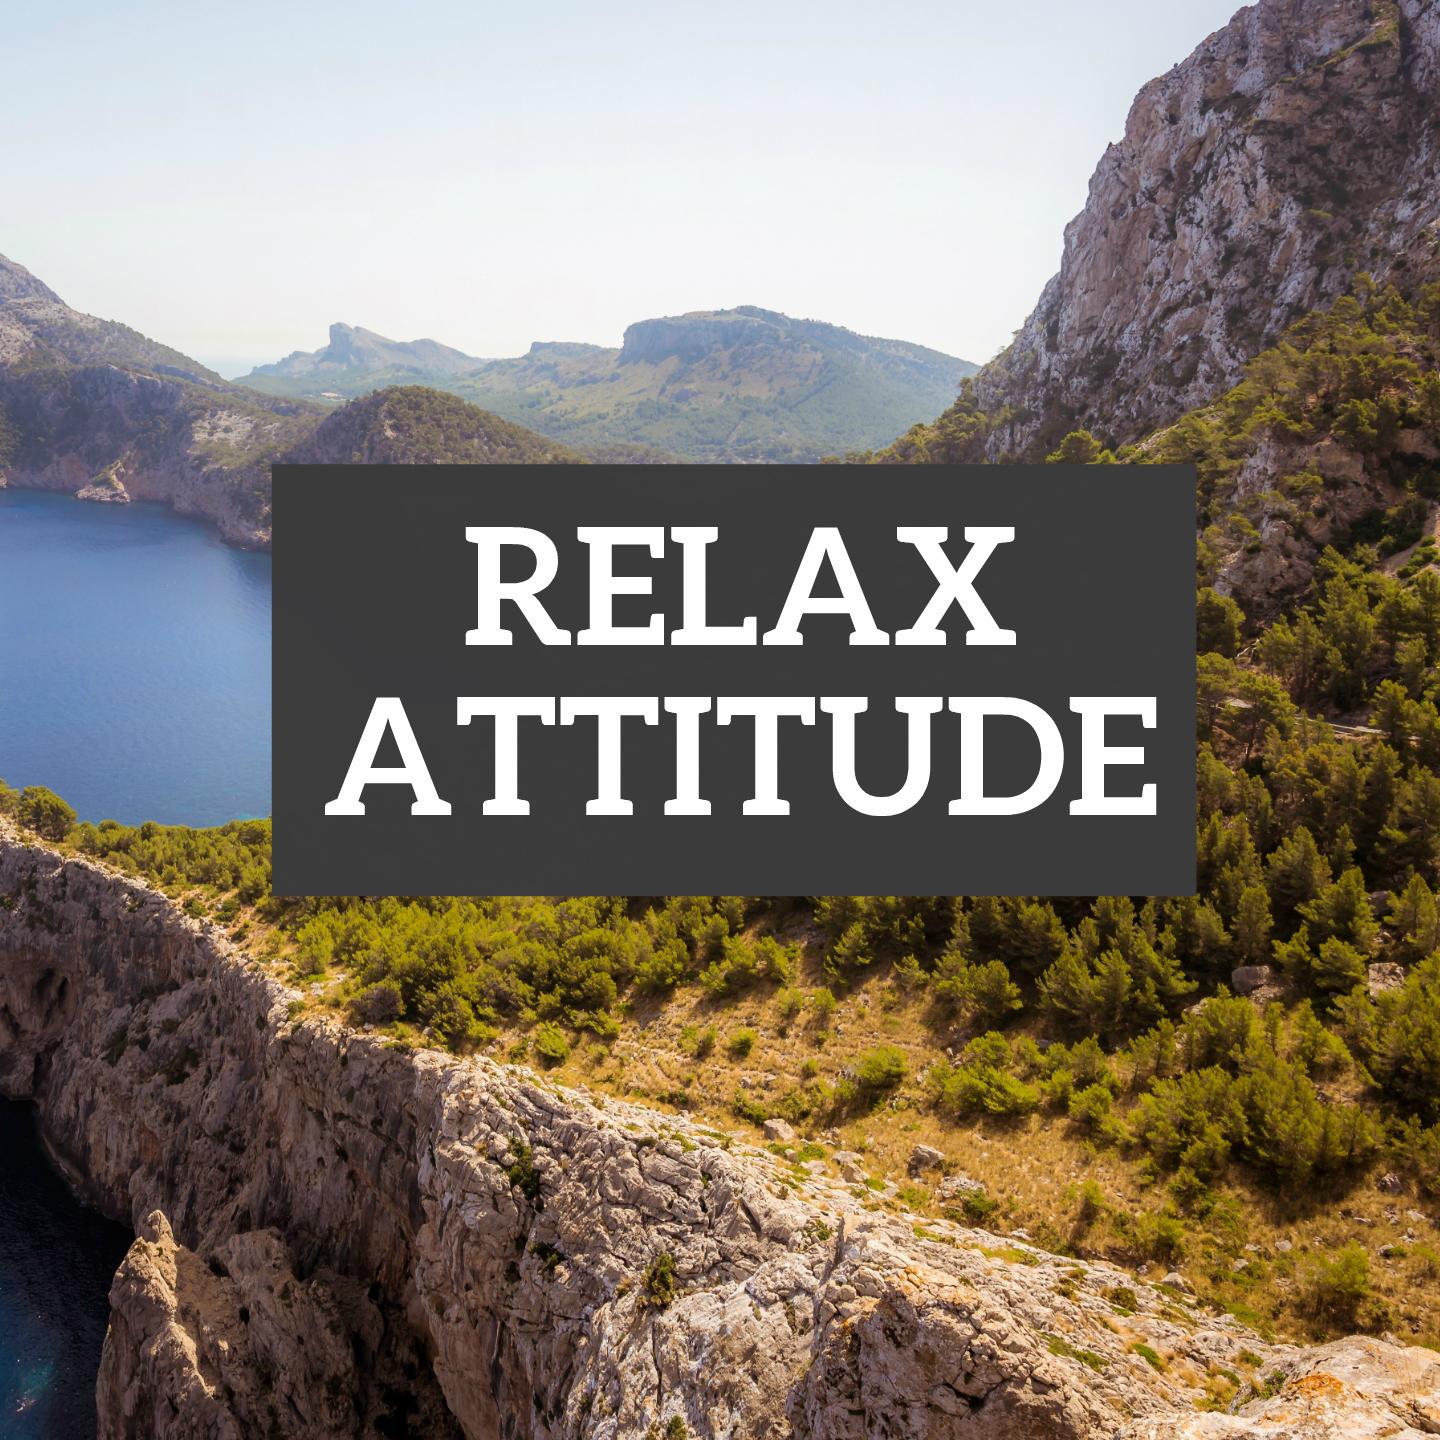 Relax Attitude